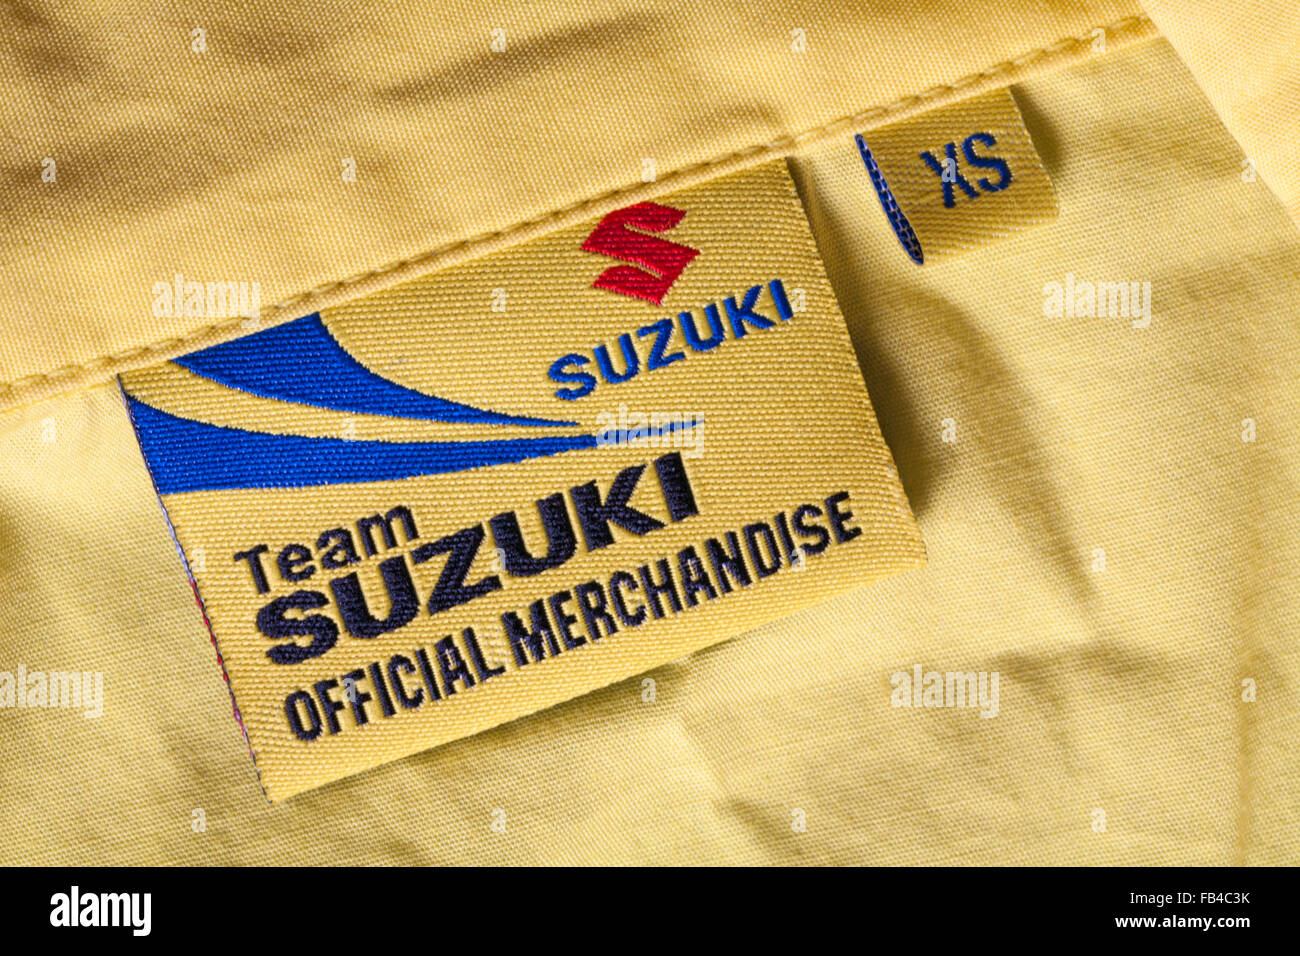 label in Team Suzuki Official Merchandise yellow shirt Stock Photo